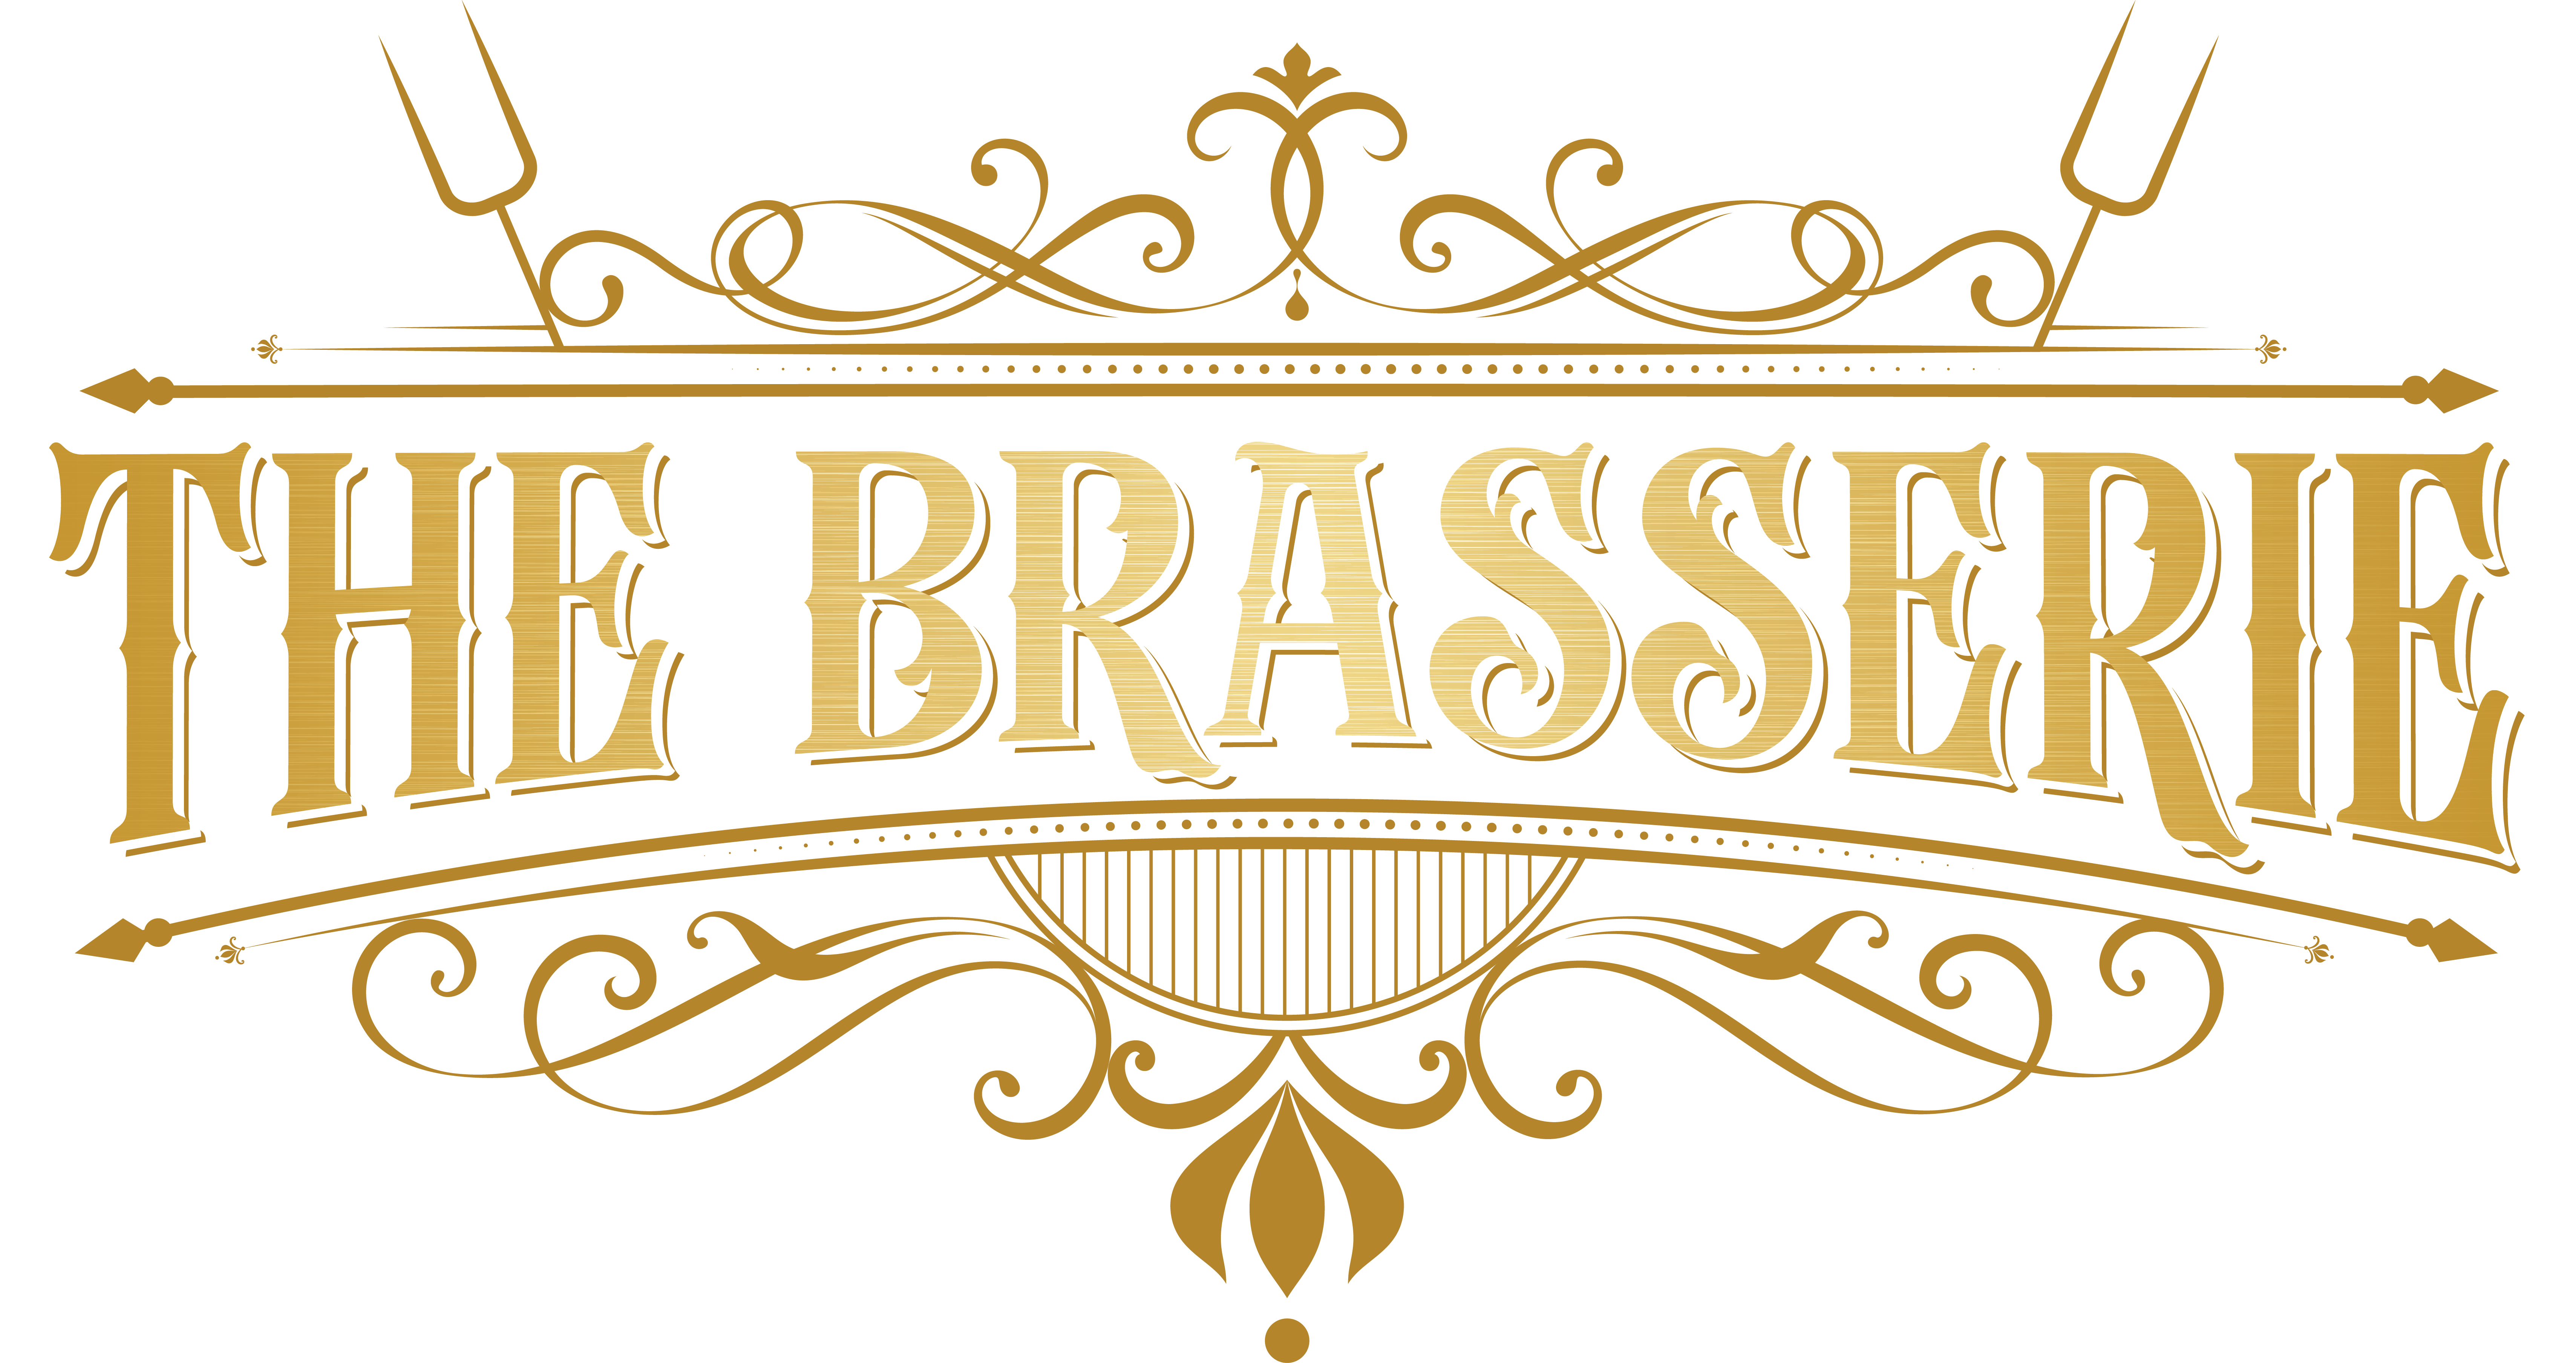 The Brasserie Food Truck